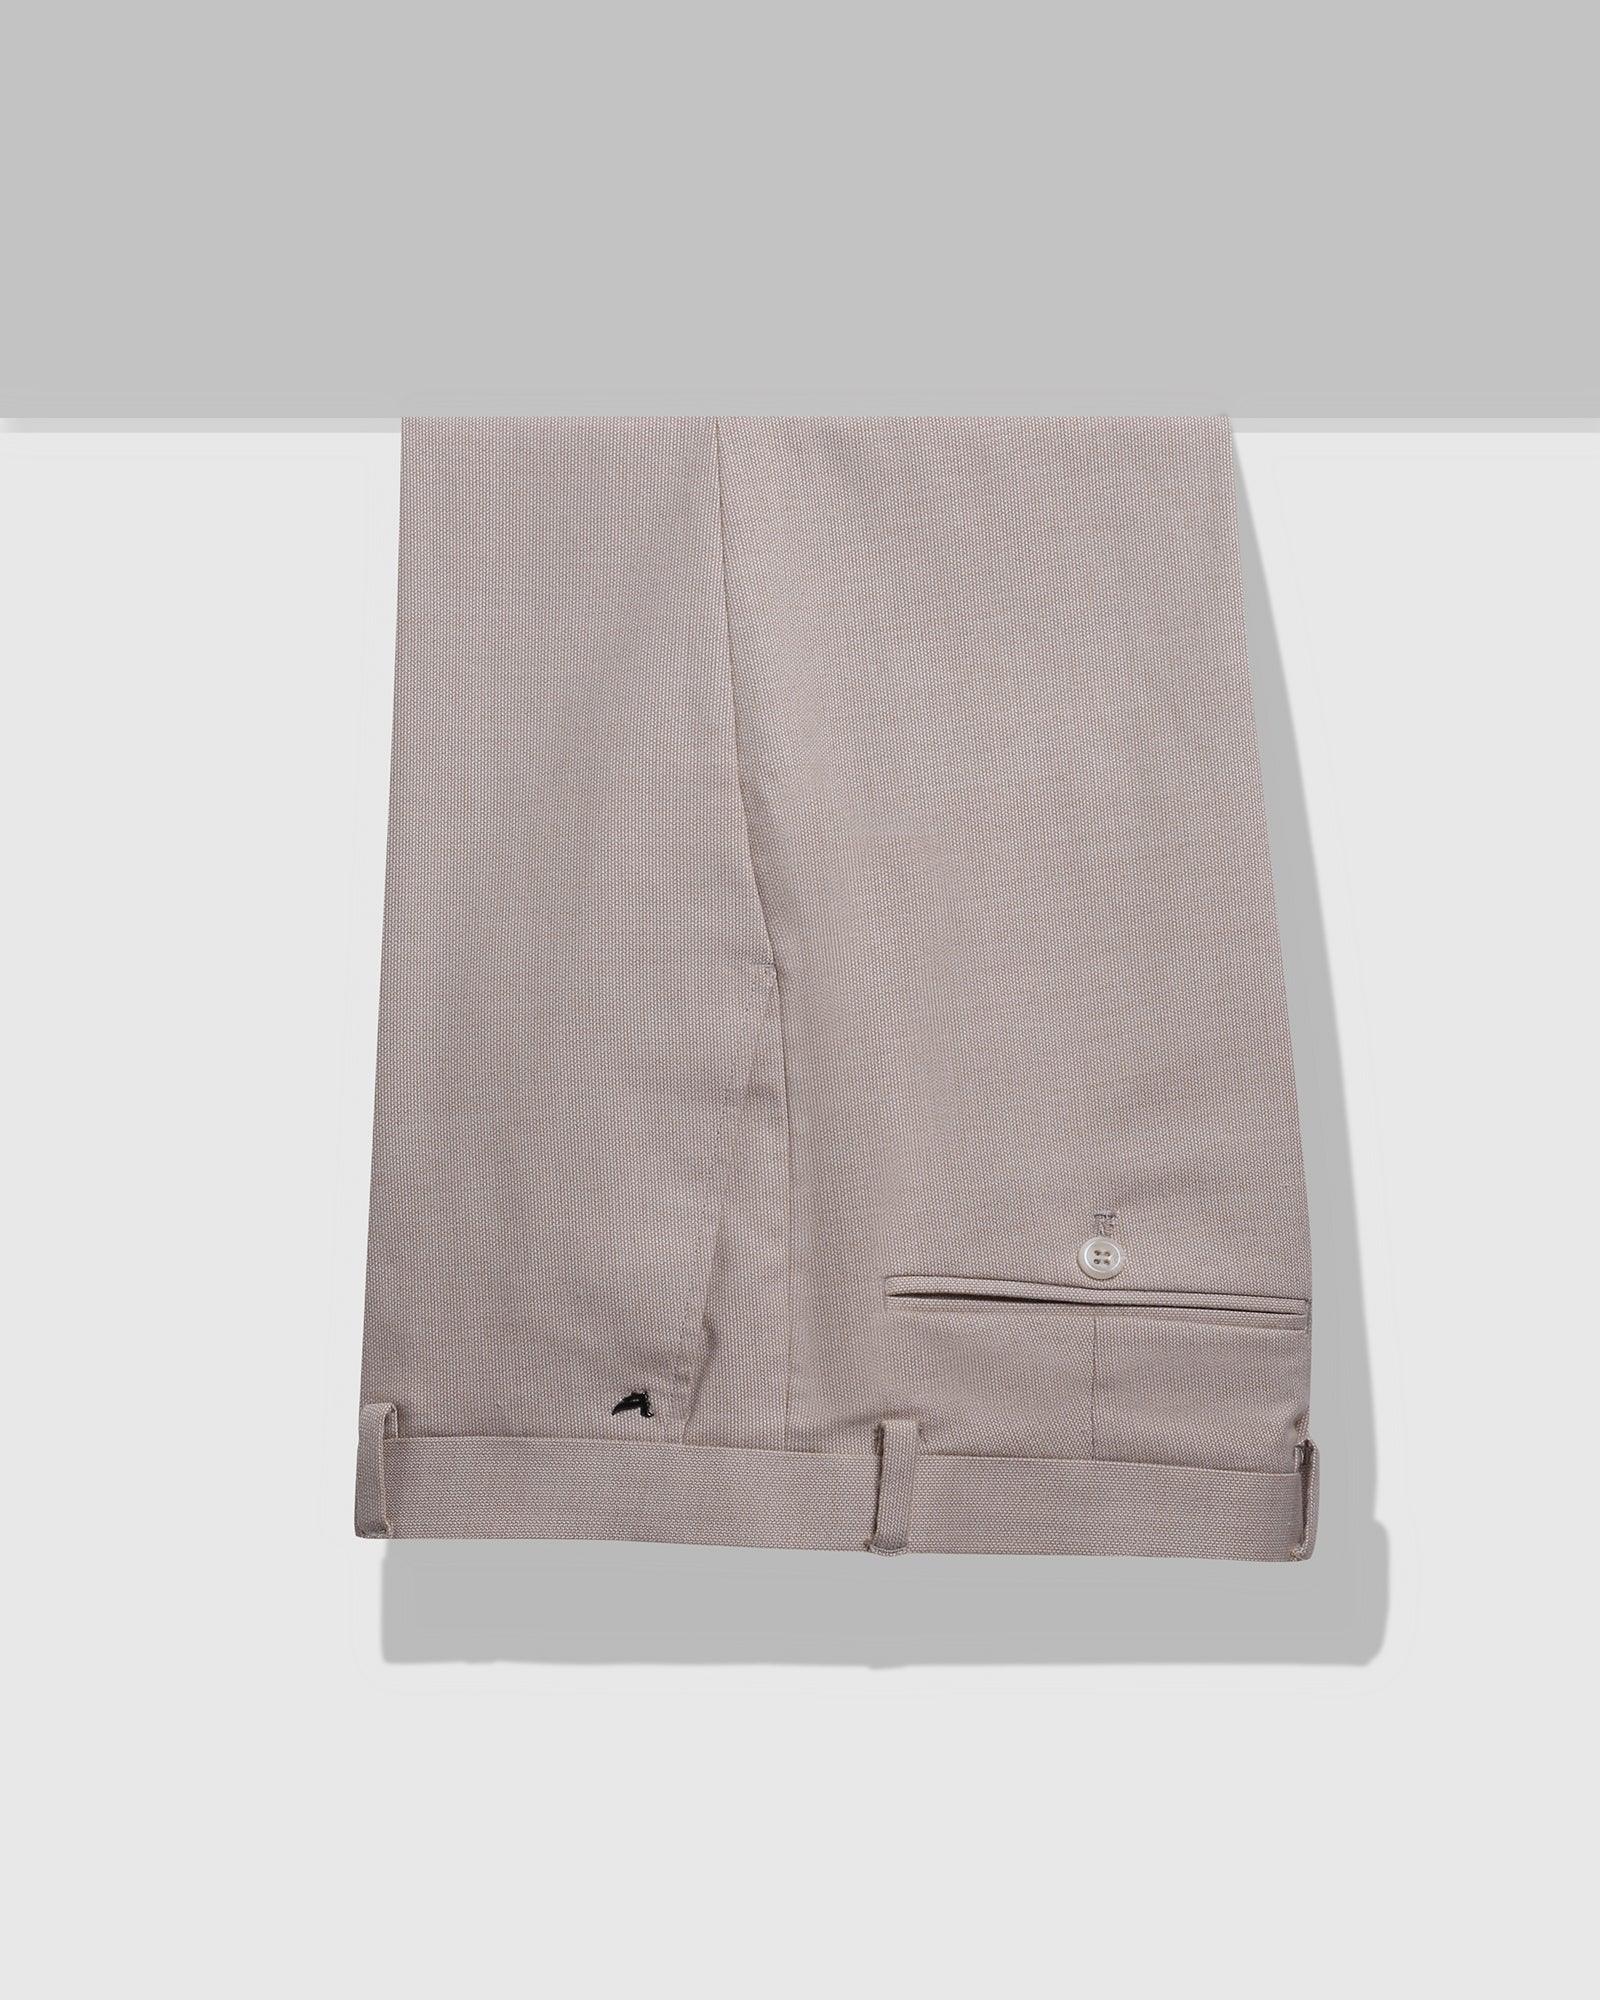 Slim Fit B-91 Formal Beige Textured Trouser - Freto